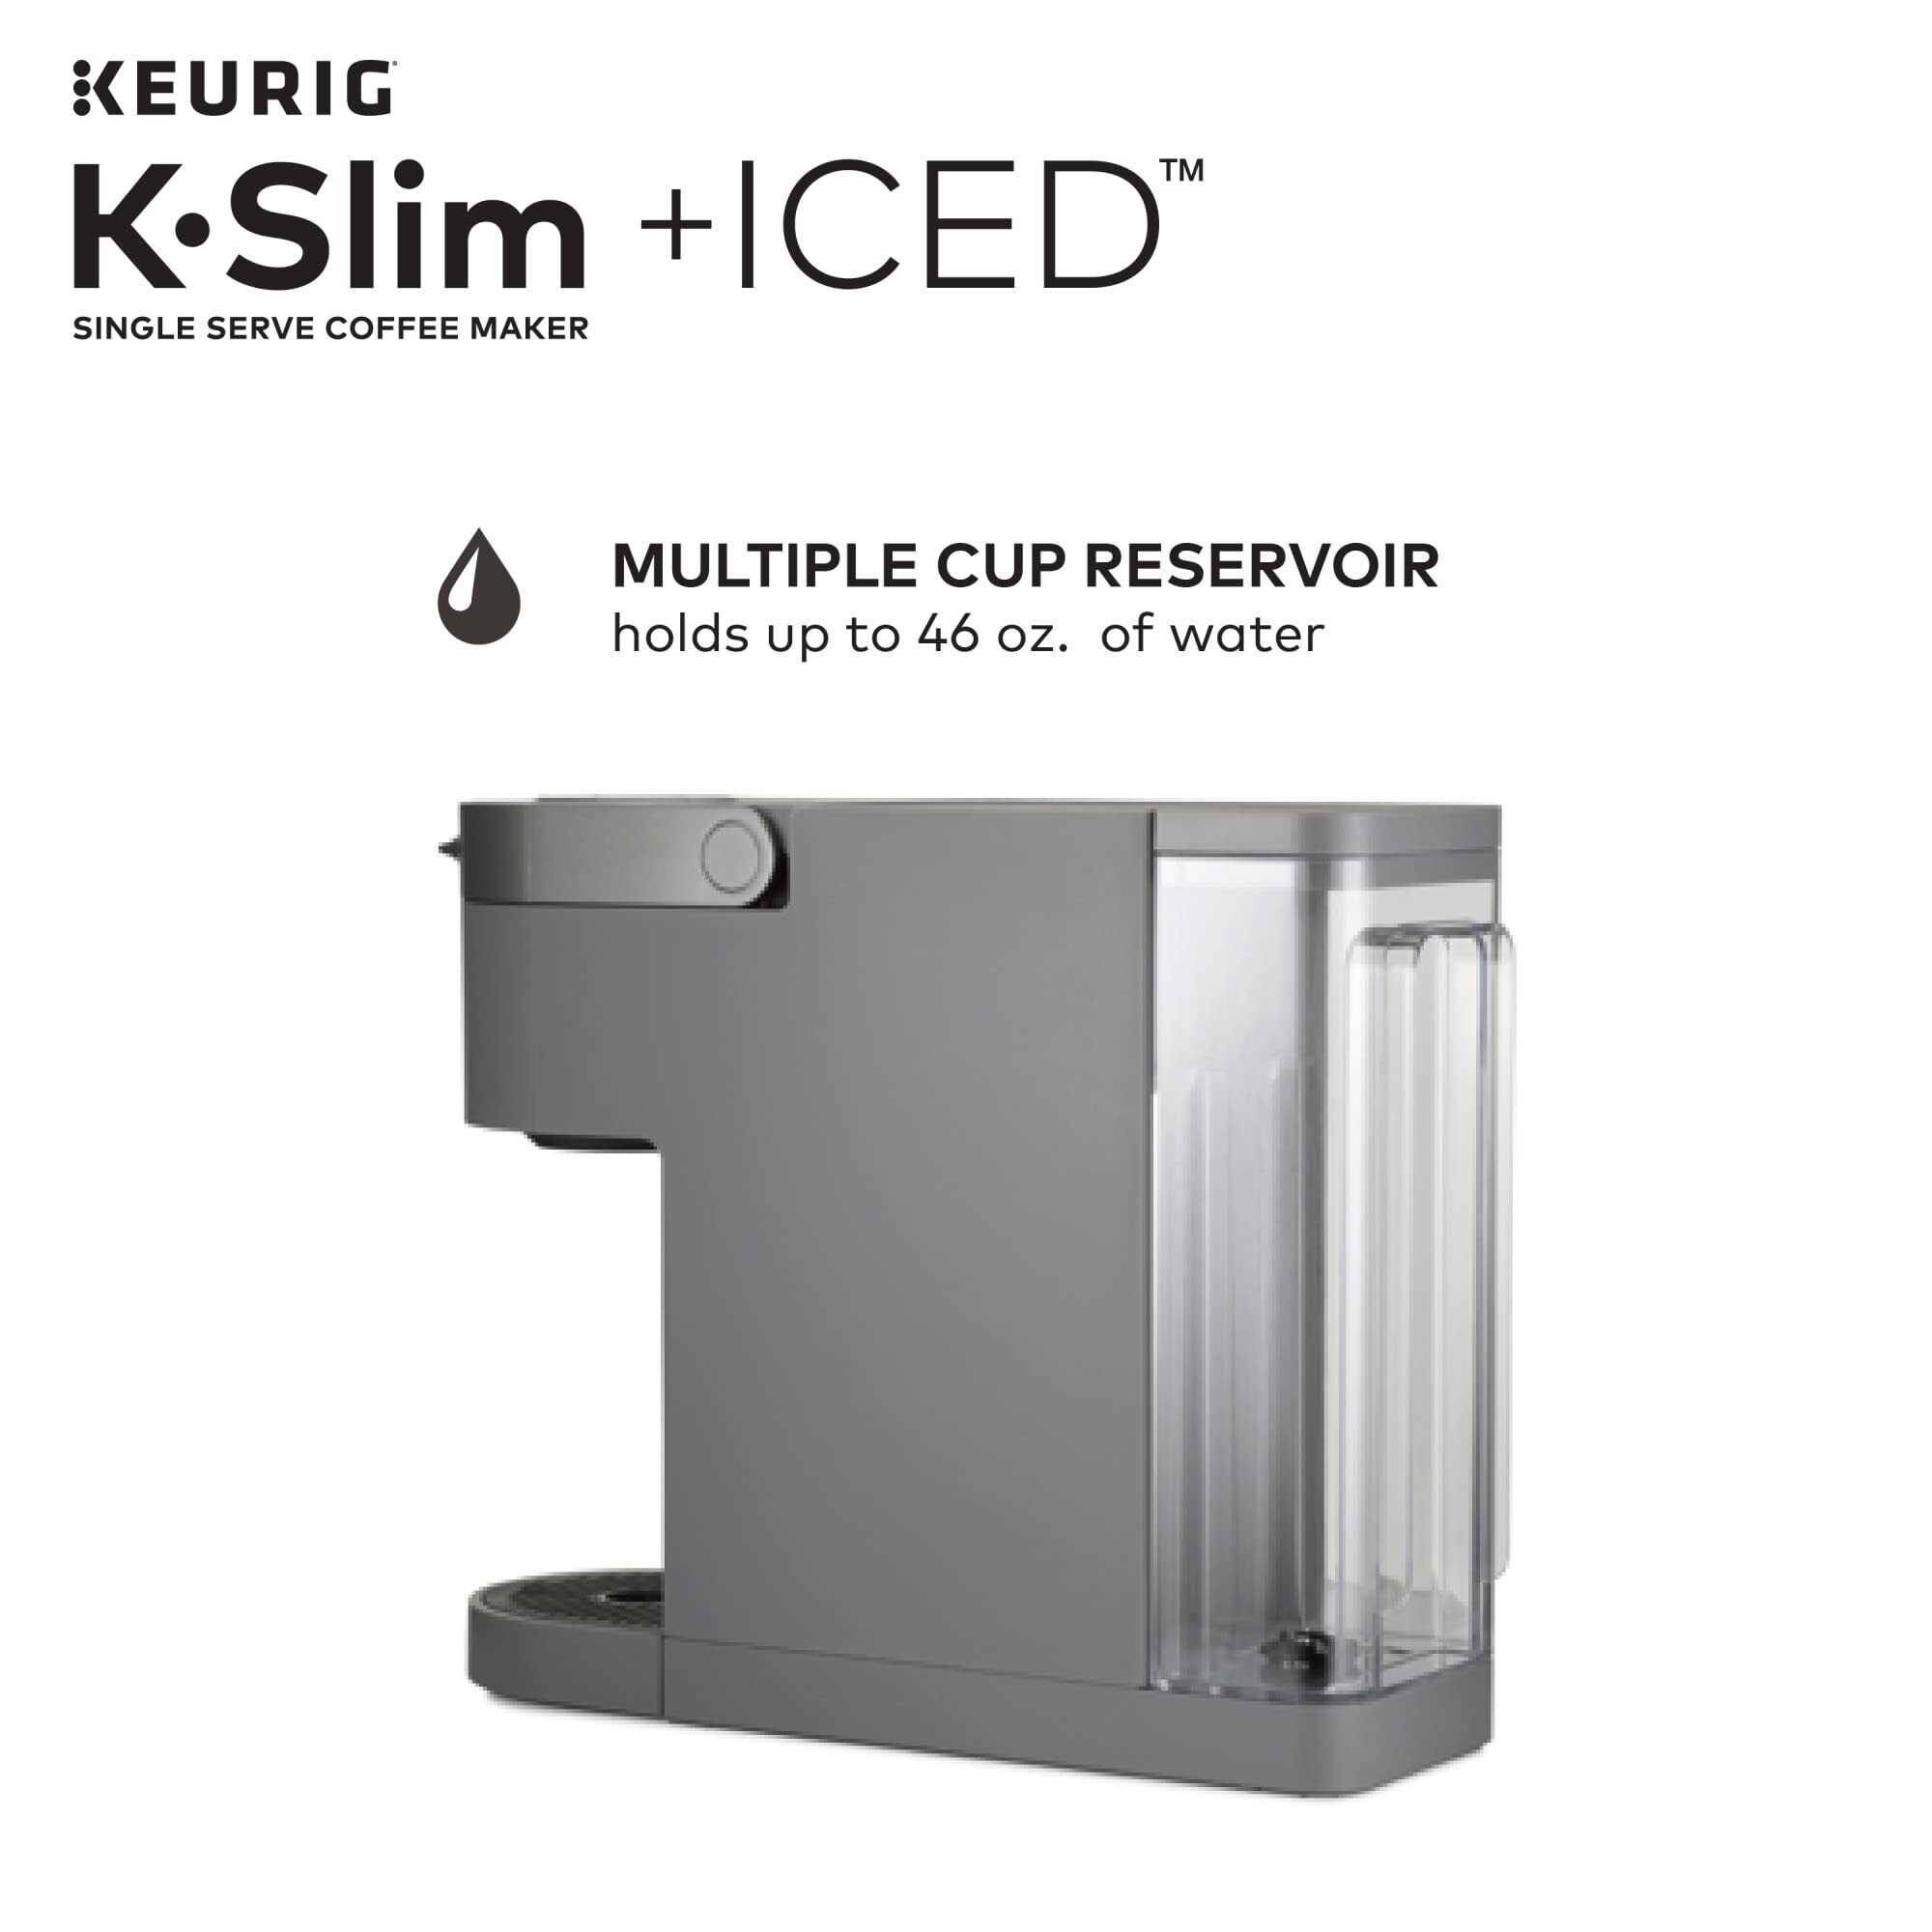 Keurig K-Slim + Iced Single Serve Coffee Maker Brews 8 to 12oz. Cups (Gray)